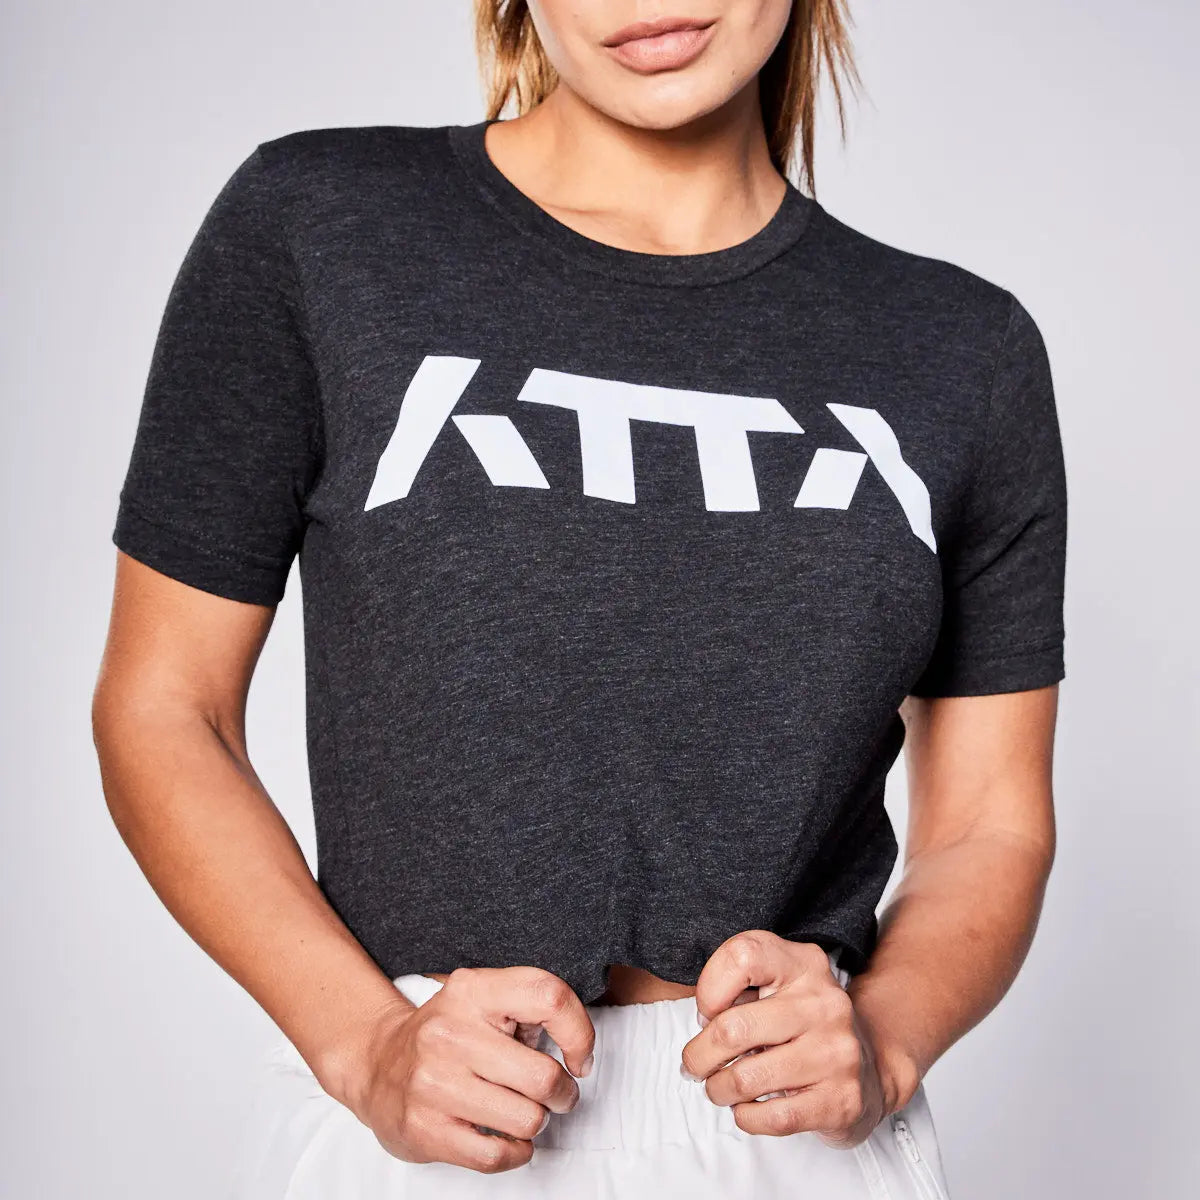 ATTA Womens Block Tri-Blend Cropped Tee - Charcoal Black ATTA